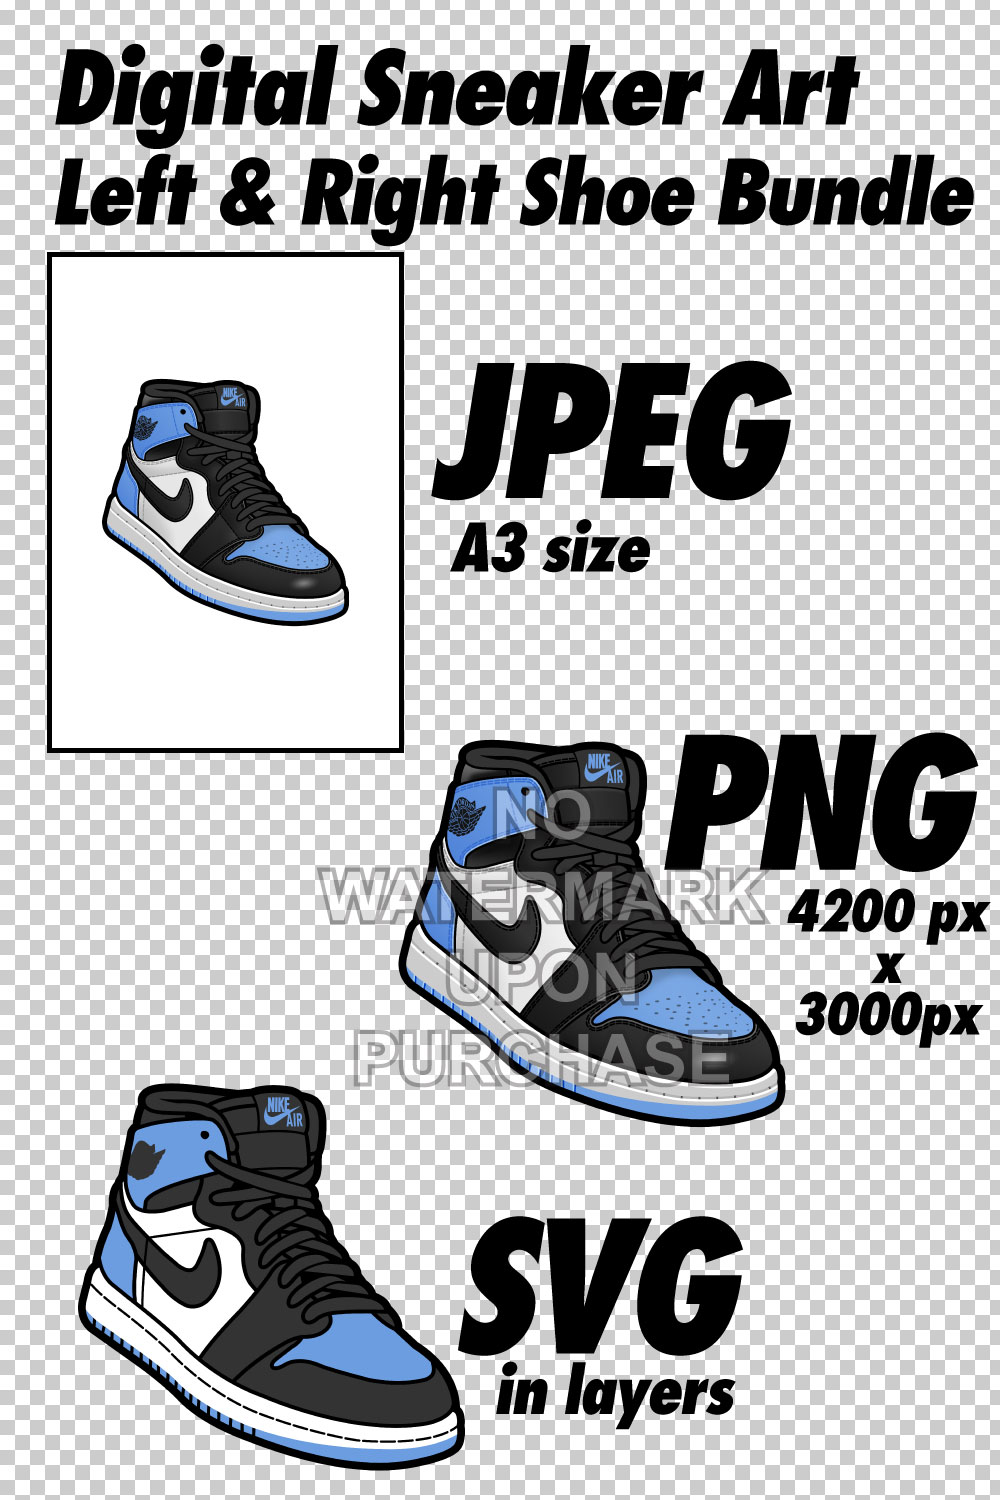 Air Jordan 1 UNC toe JPEG PNG SVG right & left shoe bundle Digital Download pinterest preview image.